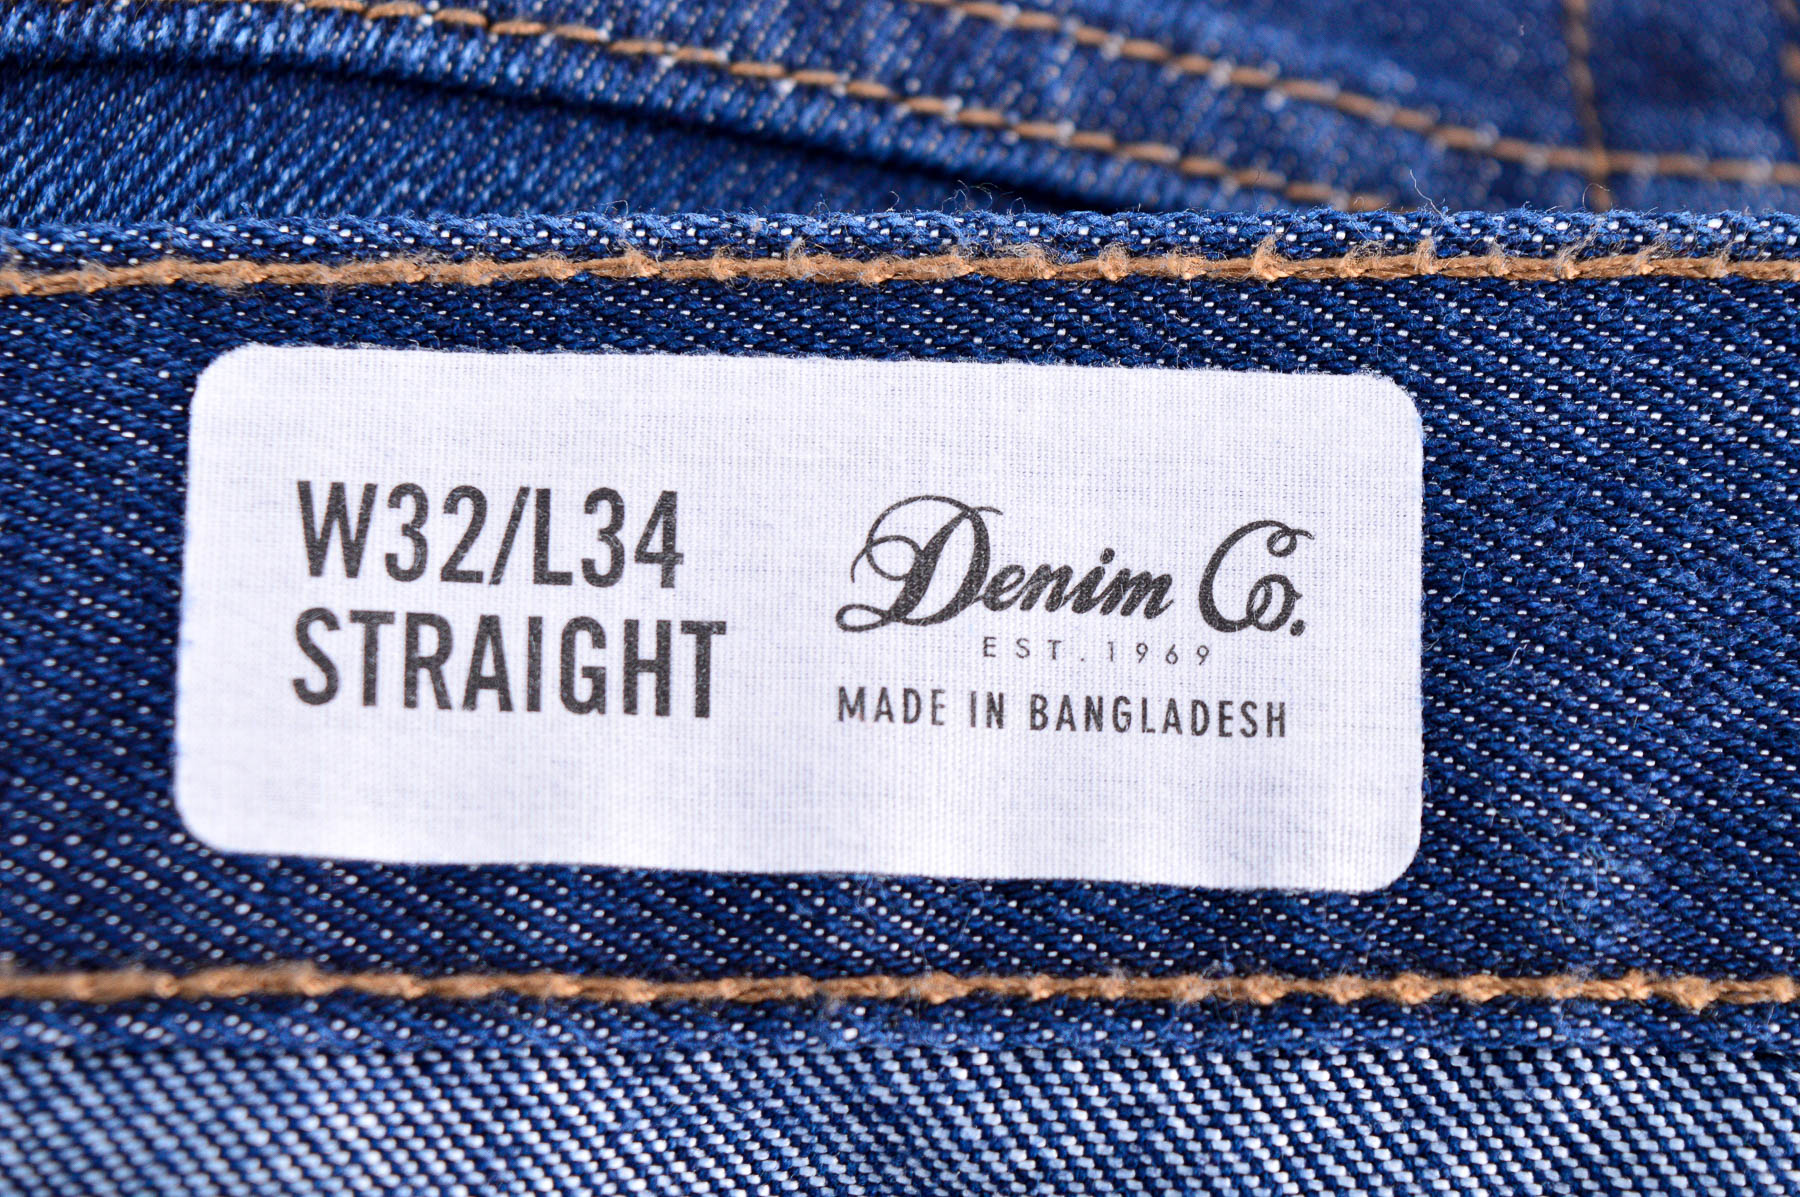 Men's jeans - Denim Co. - 2